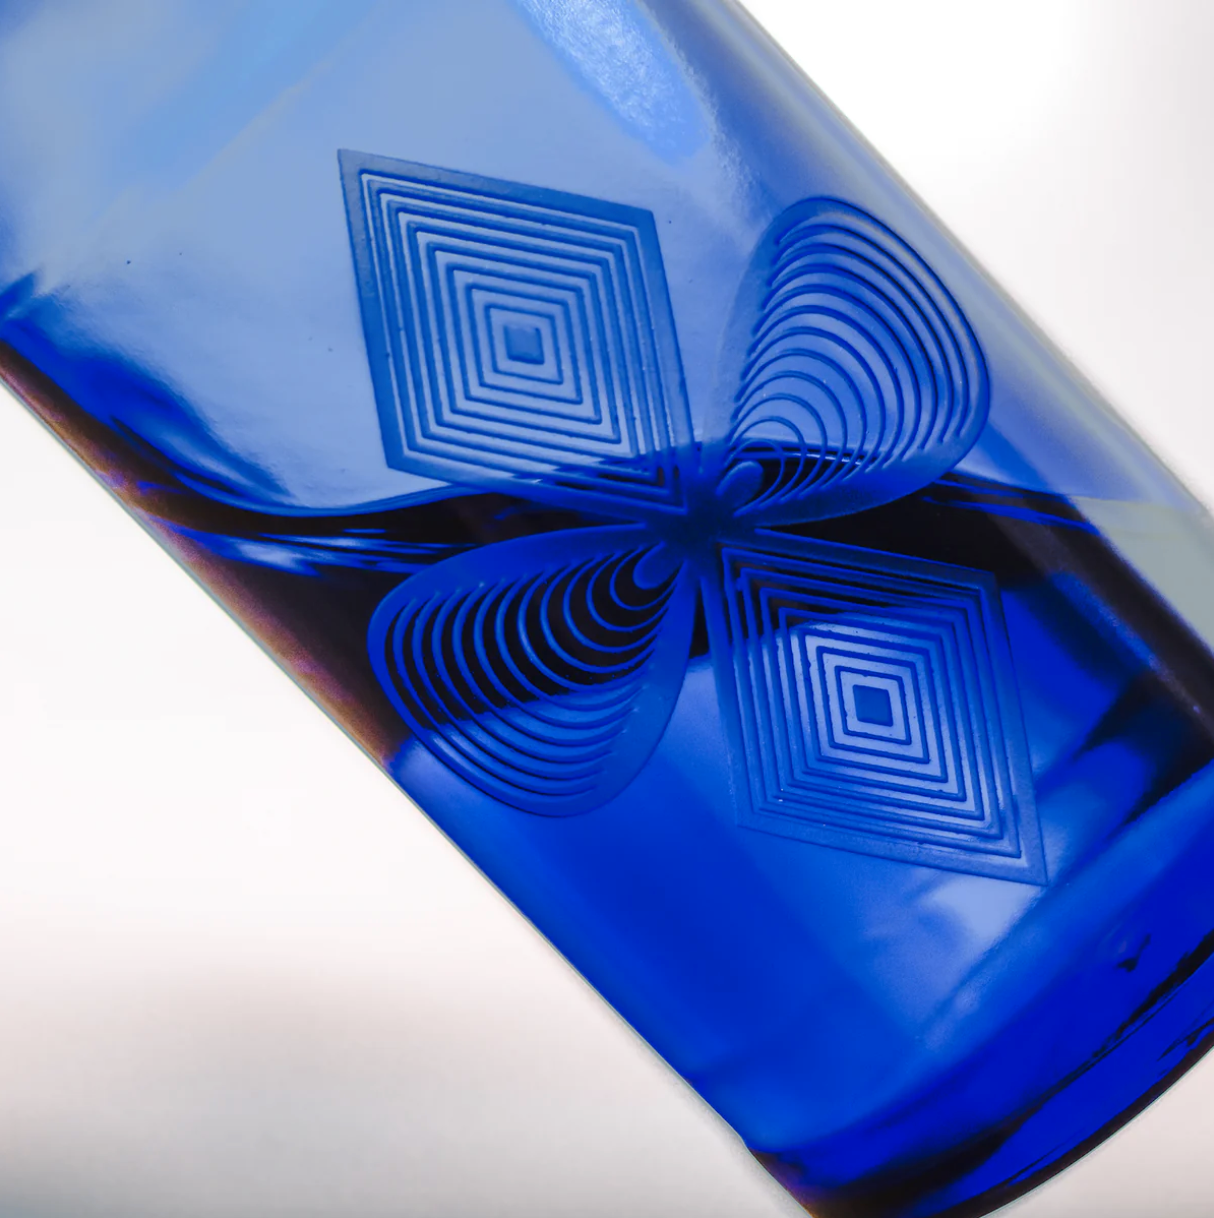 Water Code, 1 litre blue glass bottle